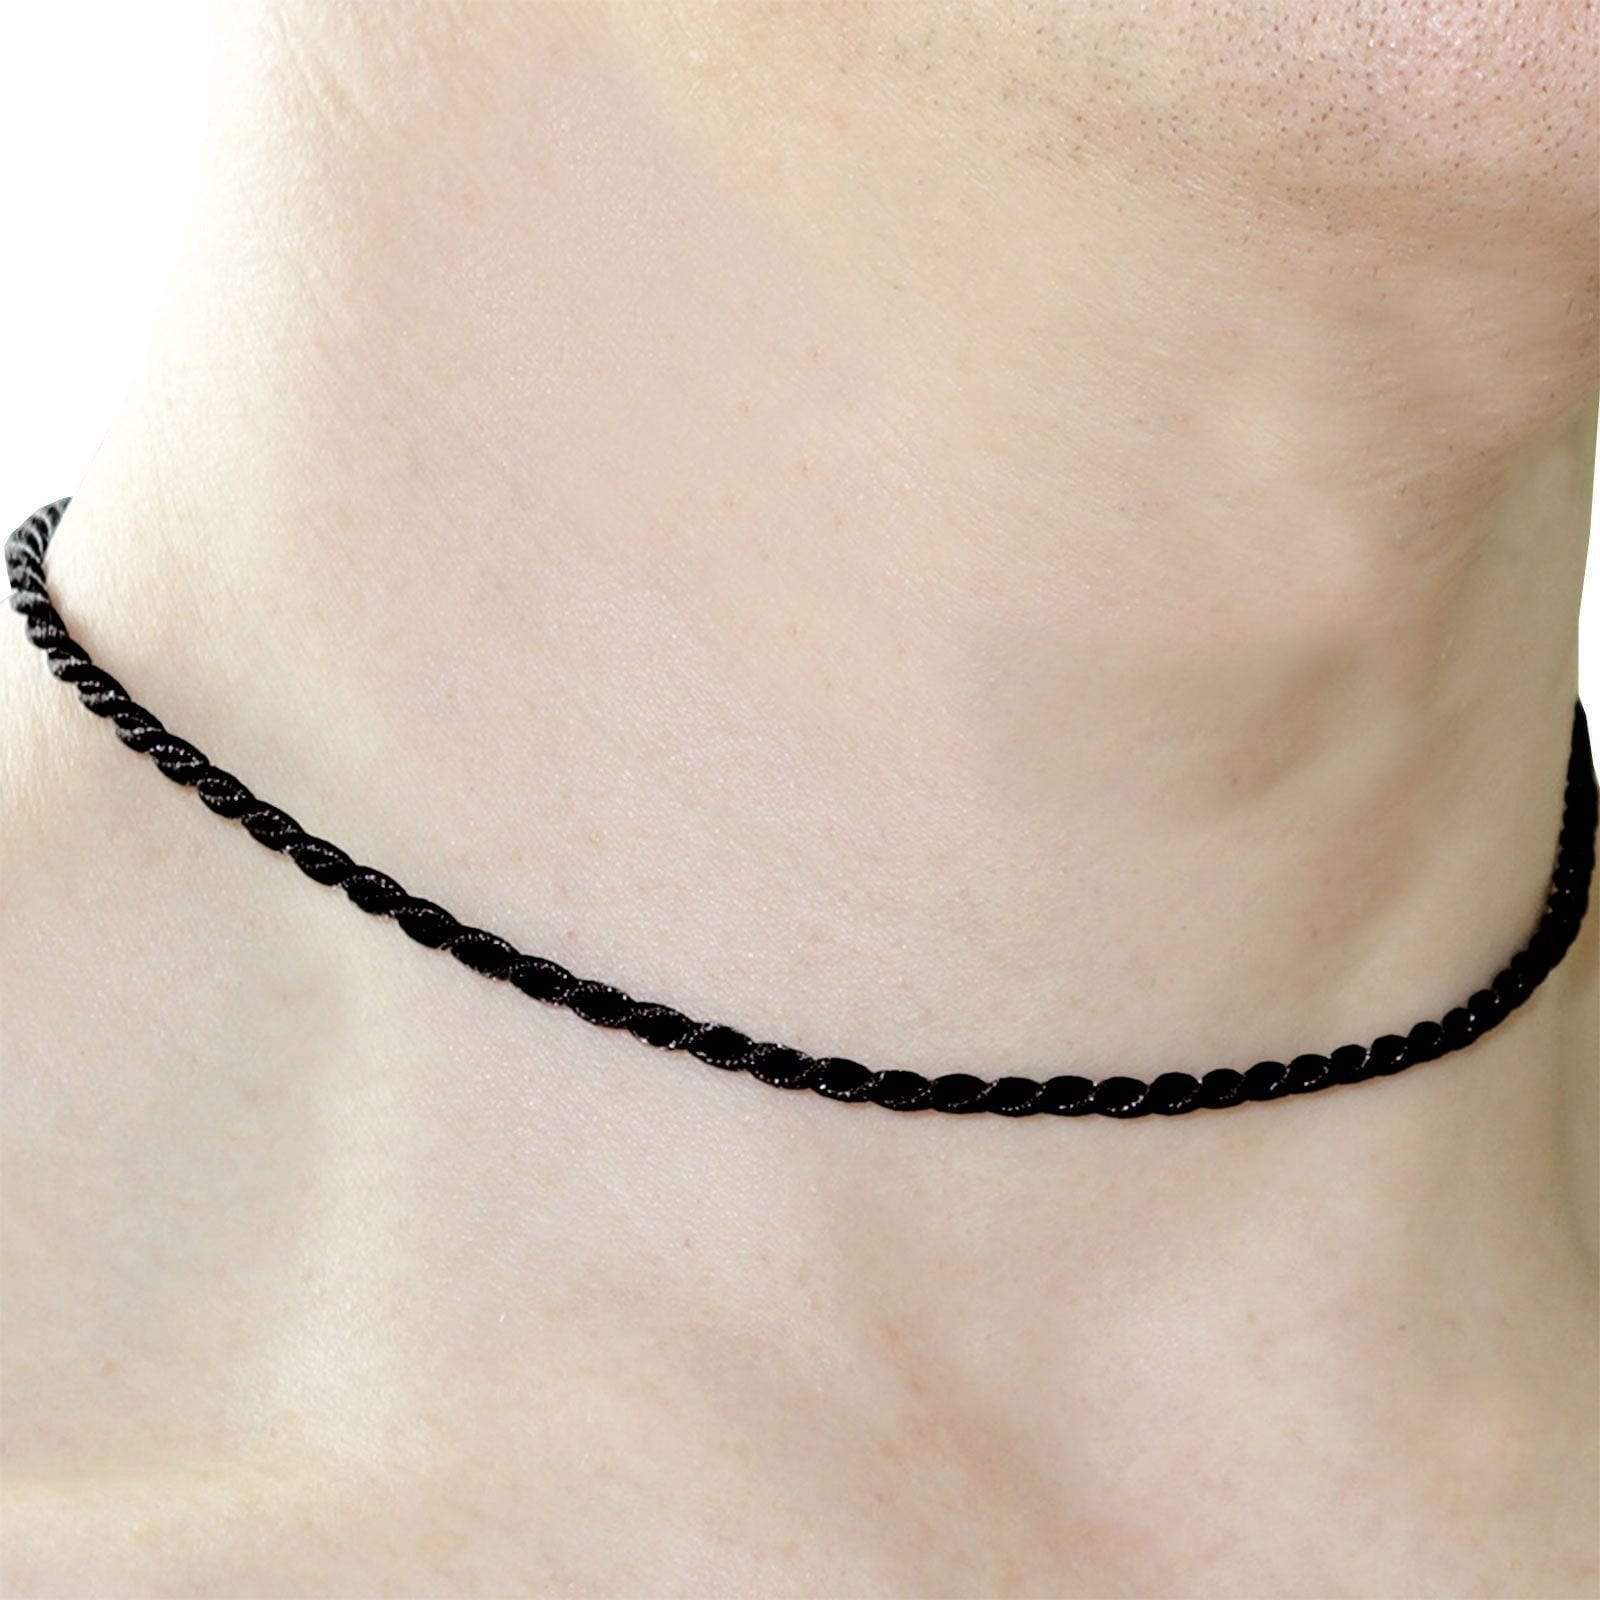 Plain Black Twisted Rope Silk Cord Necklace Chain Choker Mens Womens Boys Girls